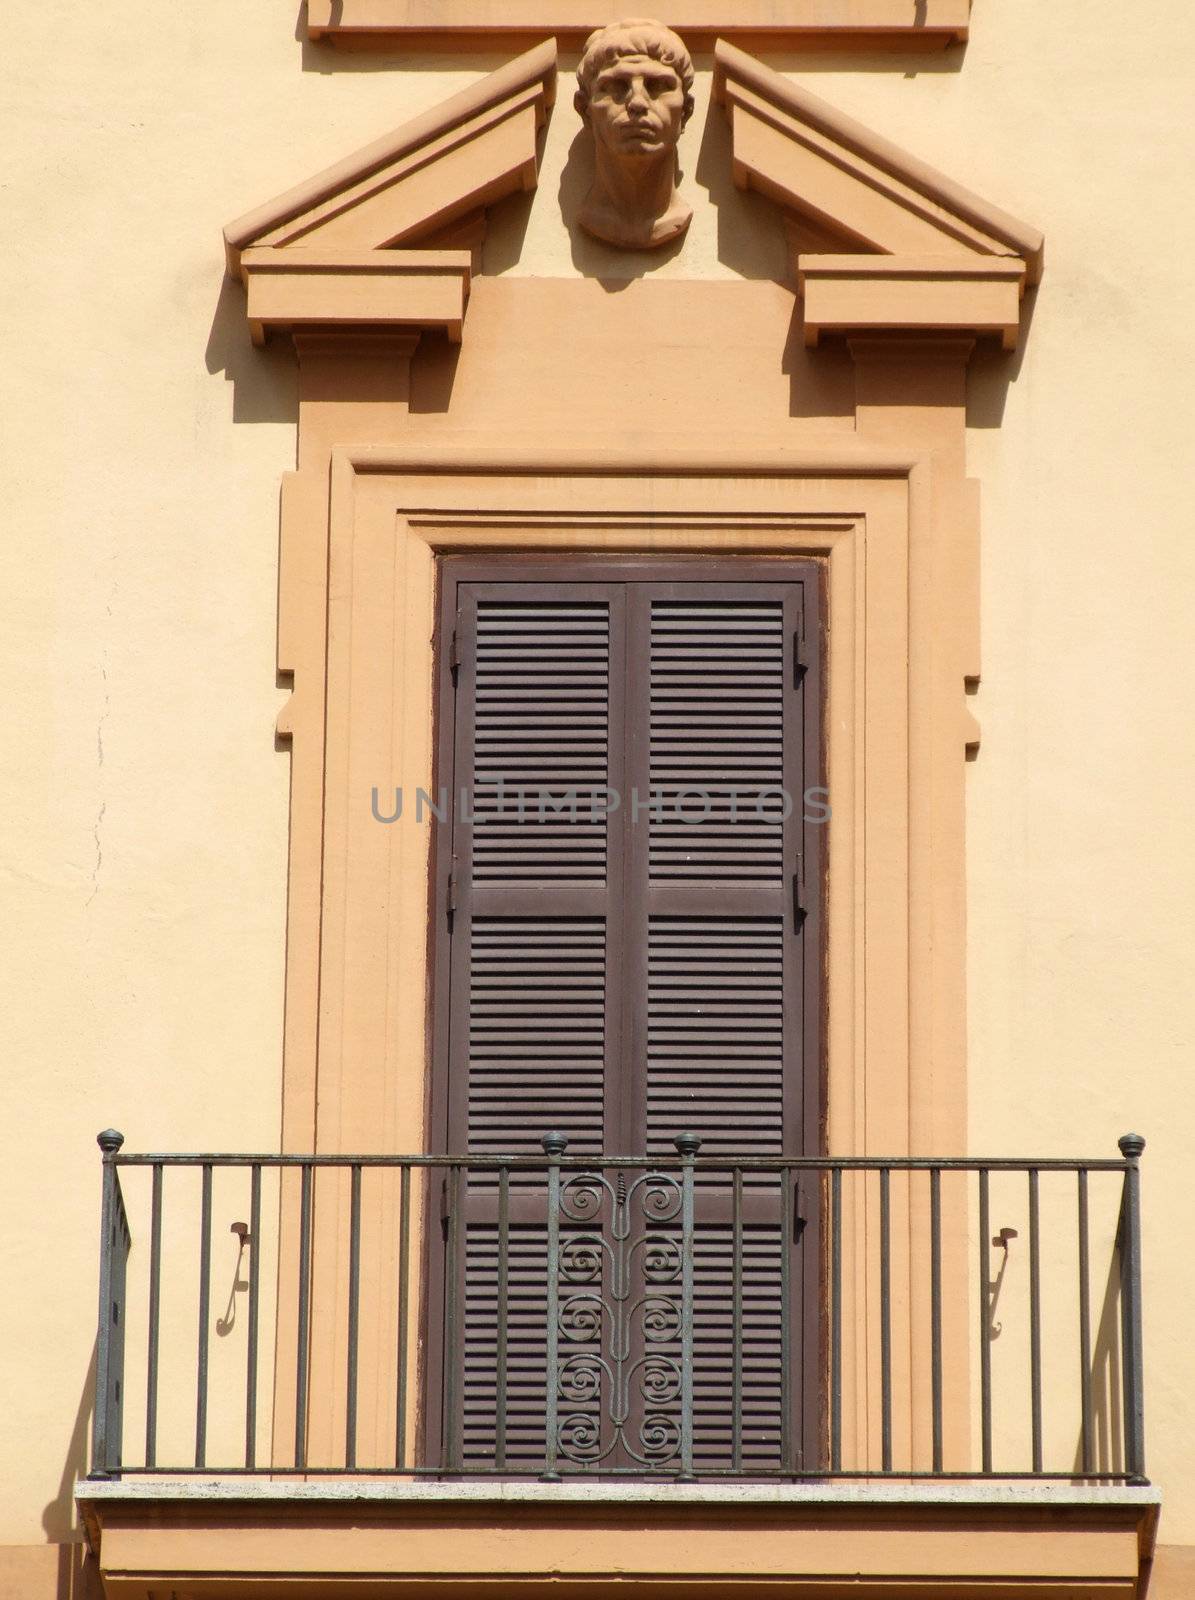 Orange wall and a decorative balcony by tupungato